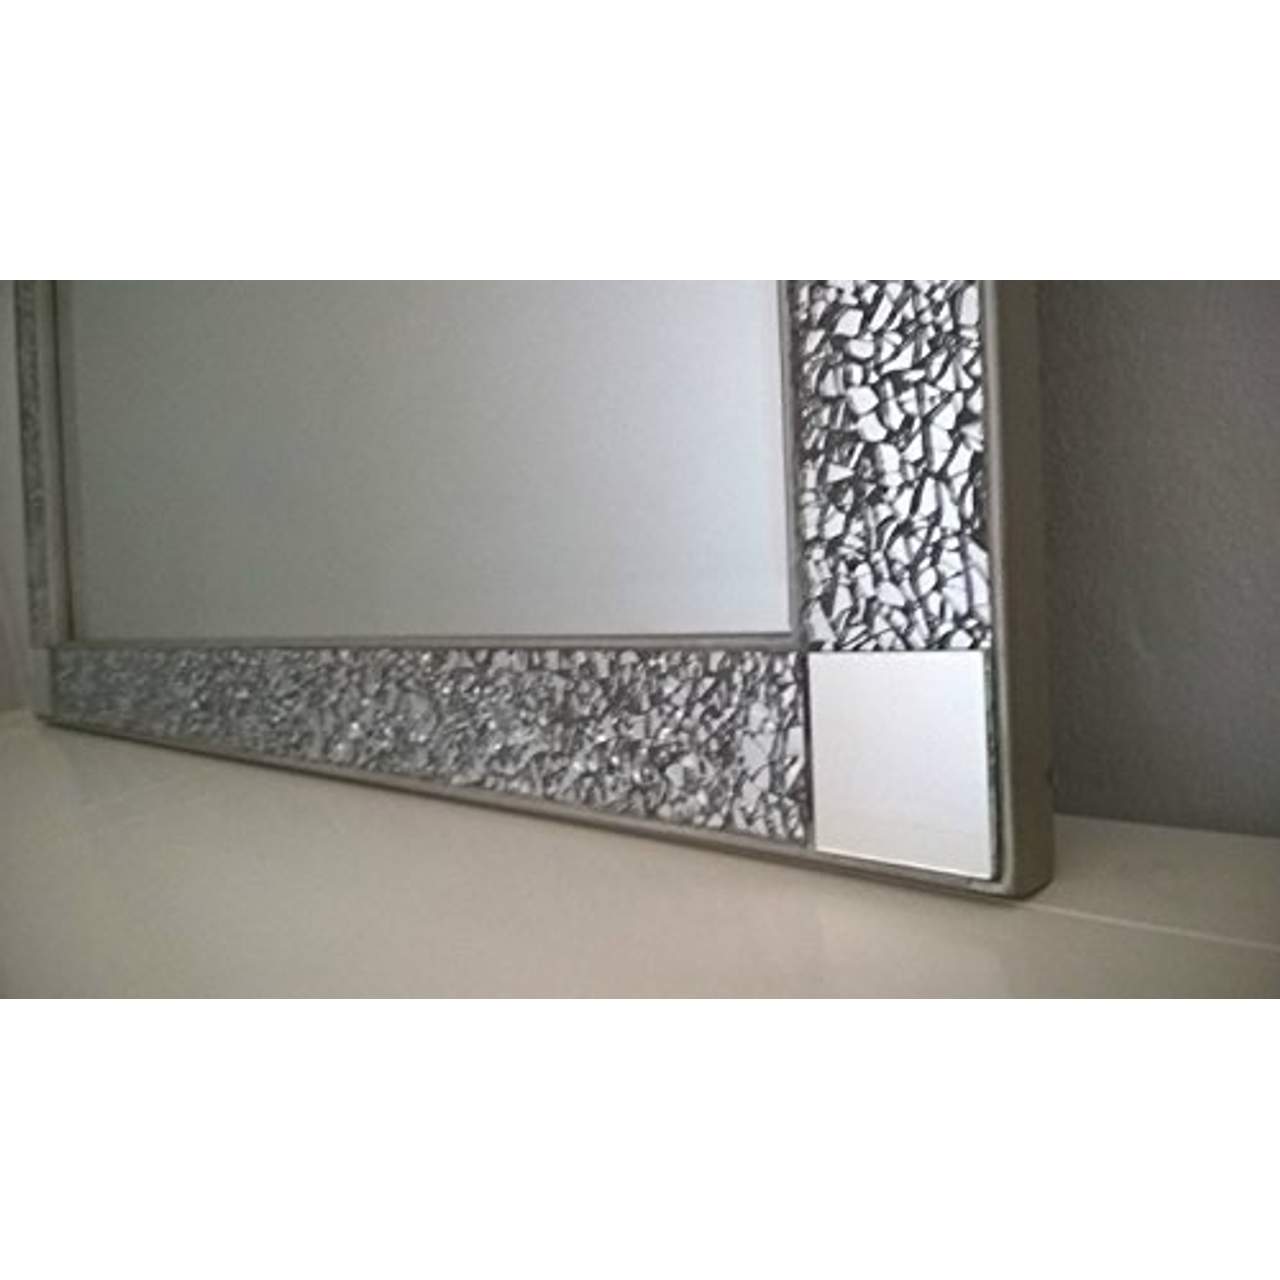 Premierinteriors Crackle Design Wand Spiegel abgeschrägten Silber Rahmen